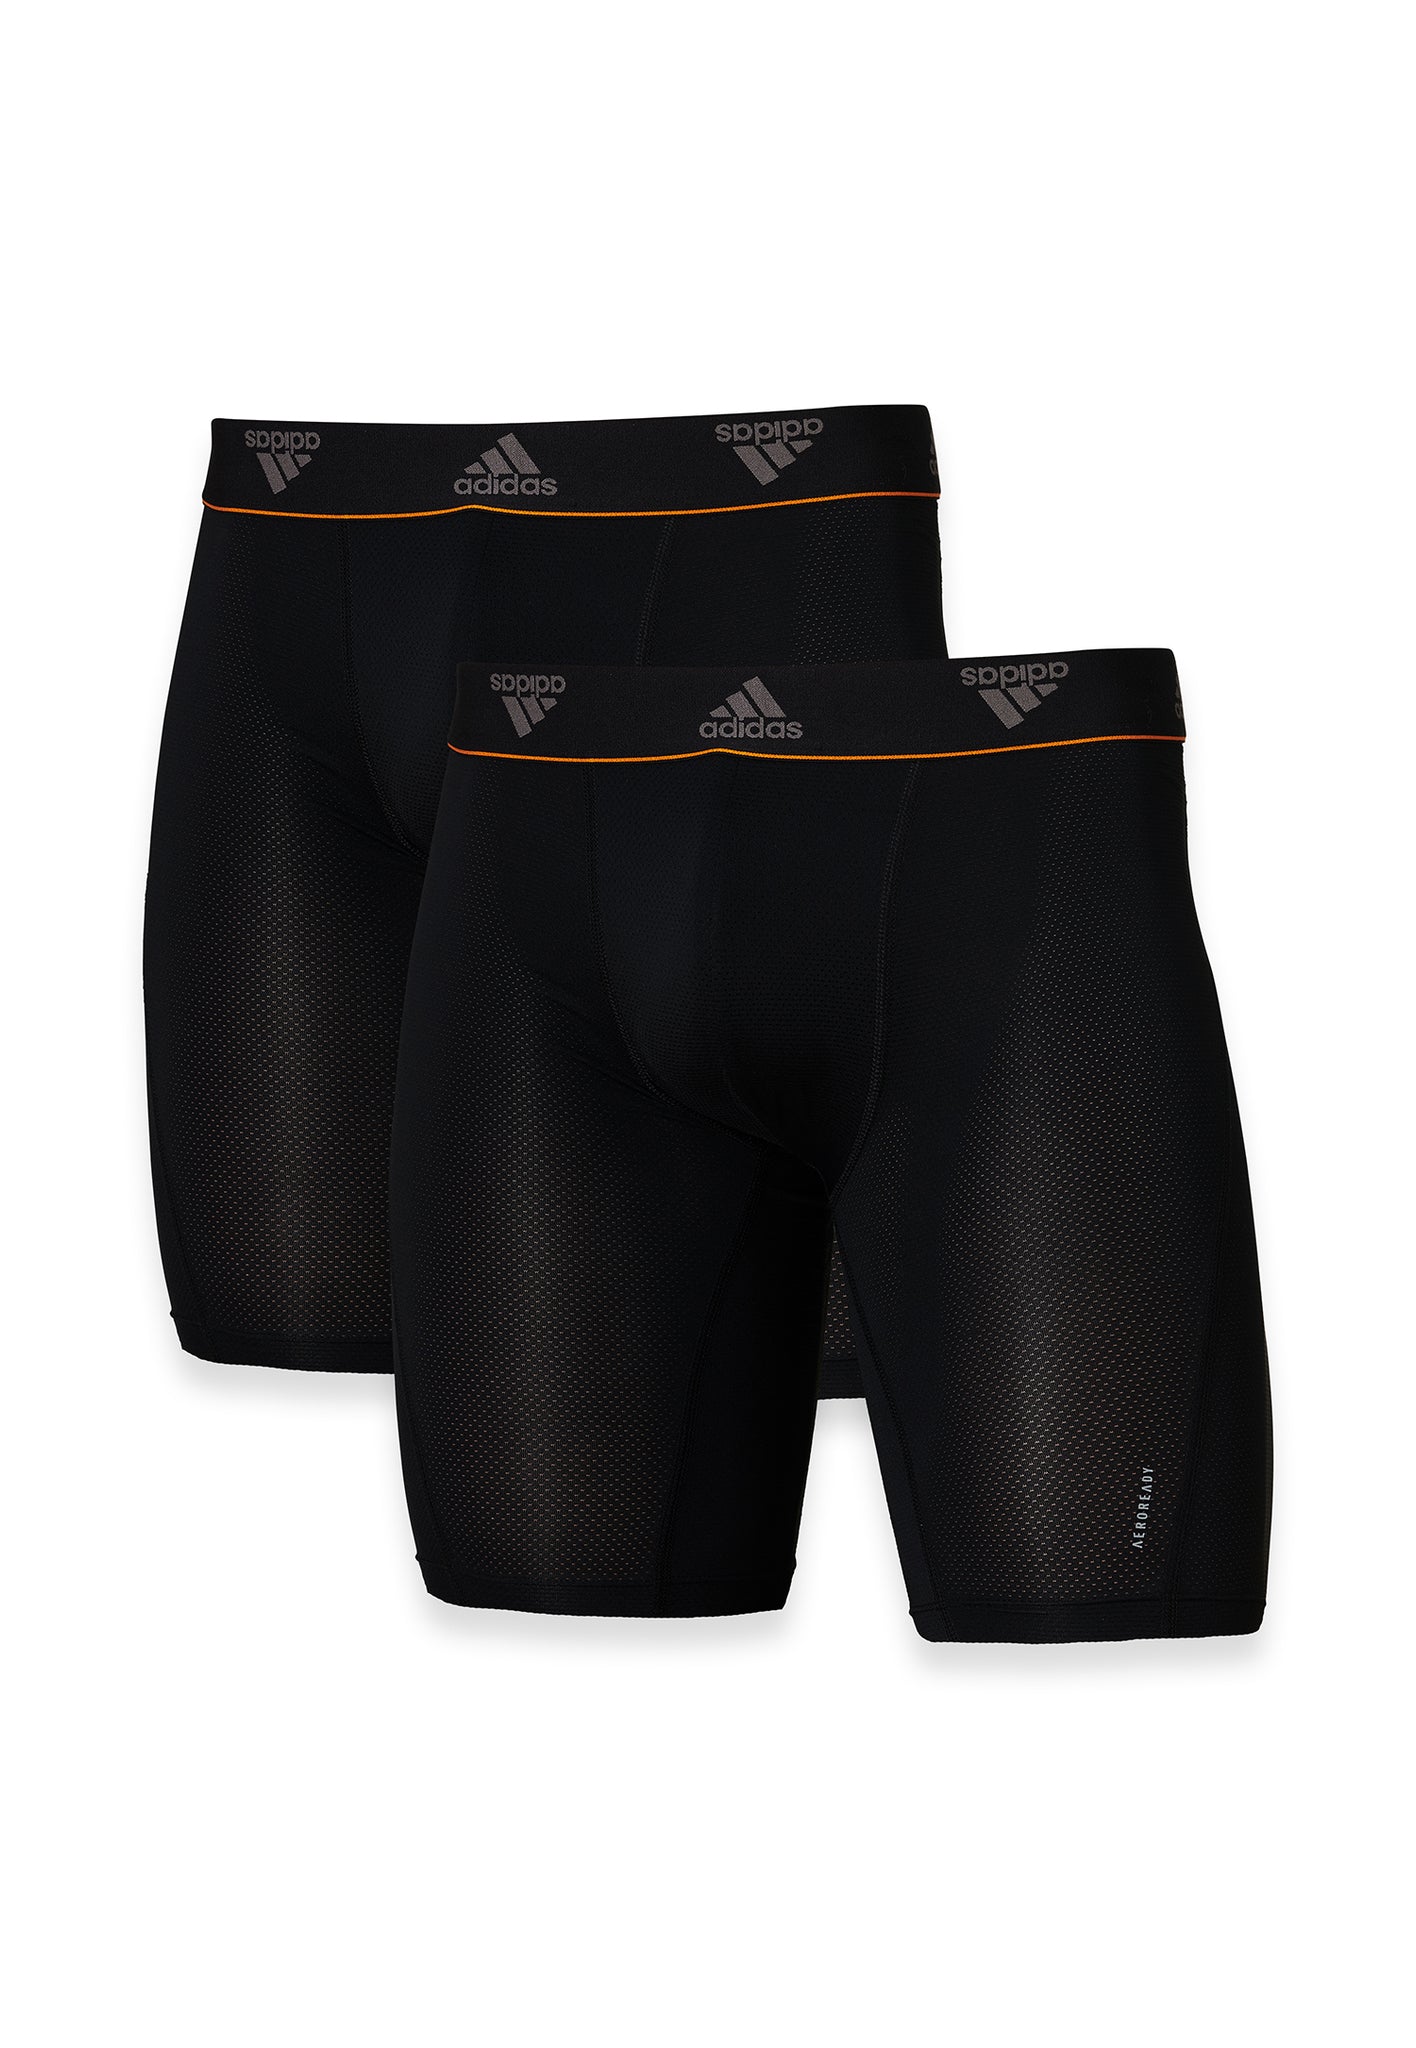 Adidas Men's Performance Boxer Brief Underwear (3-Pack) - Grey/Black/Royal  